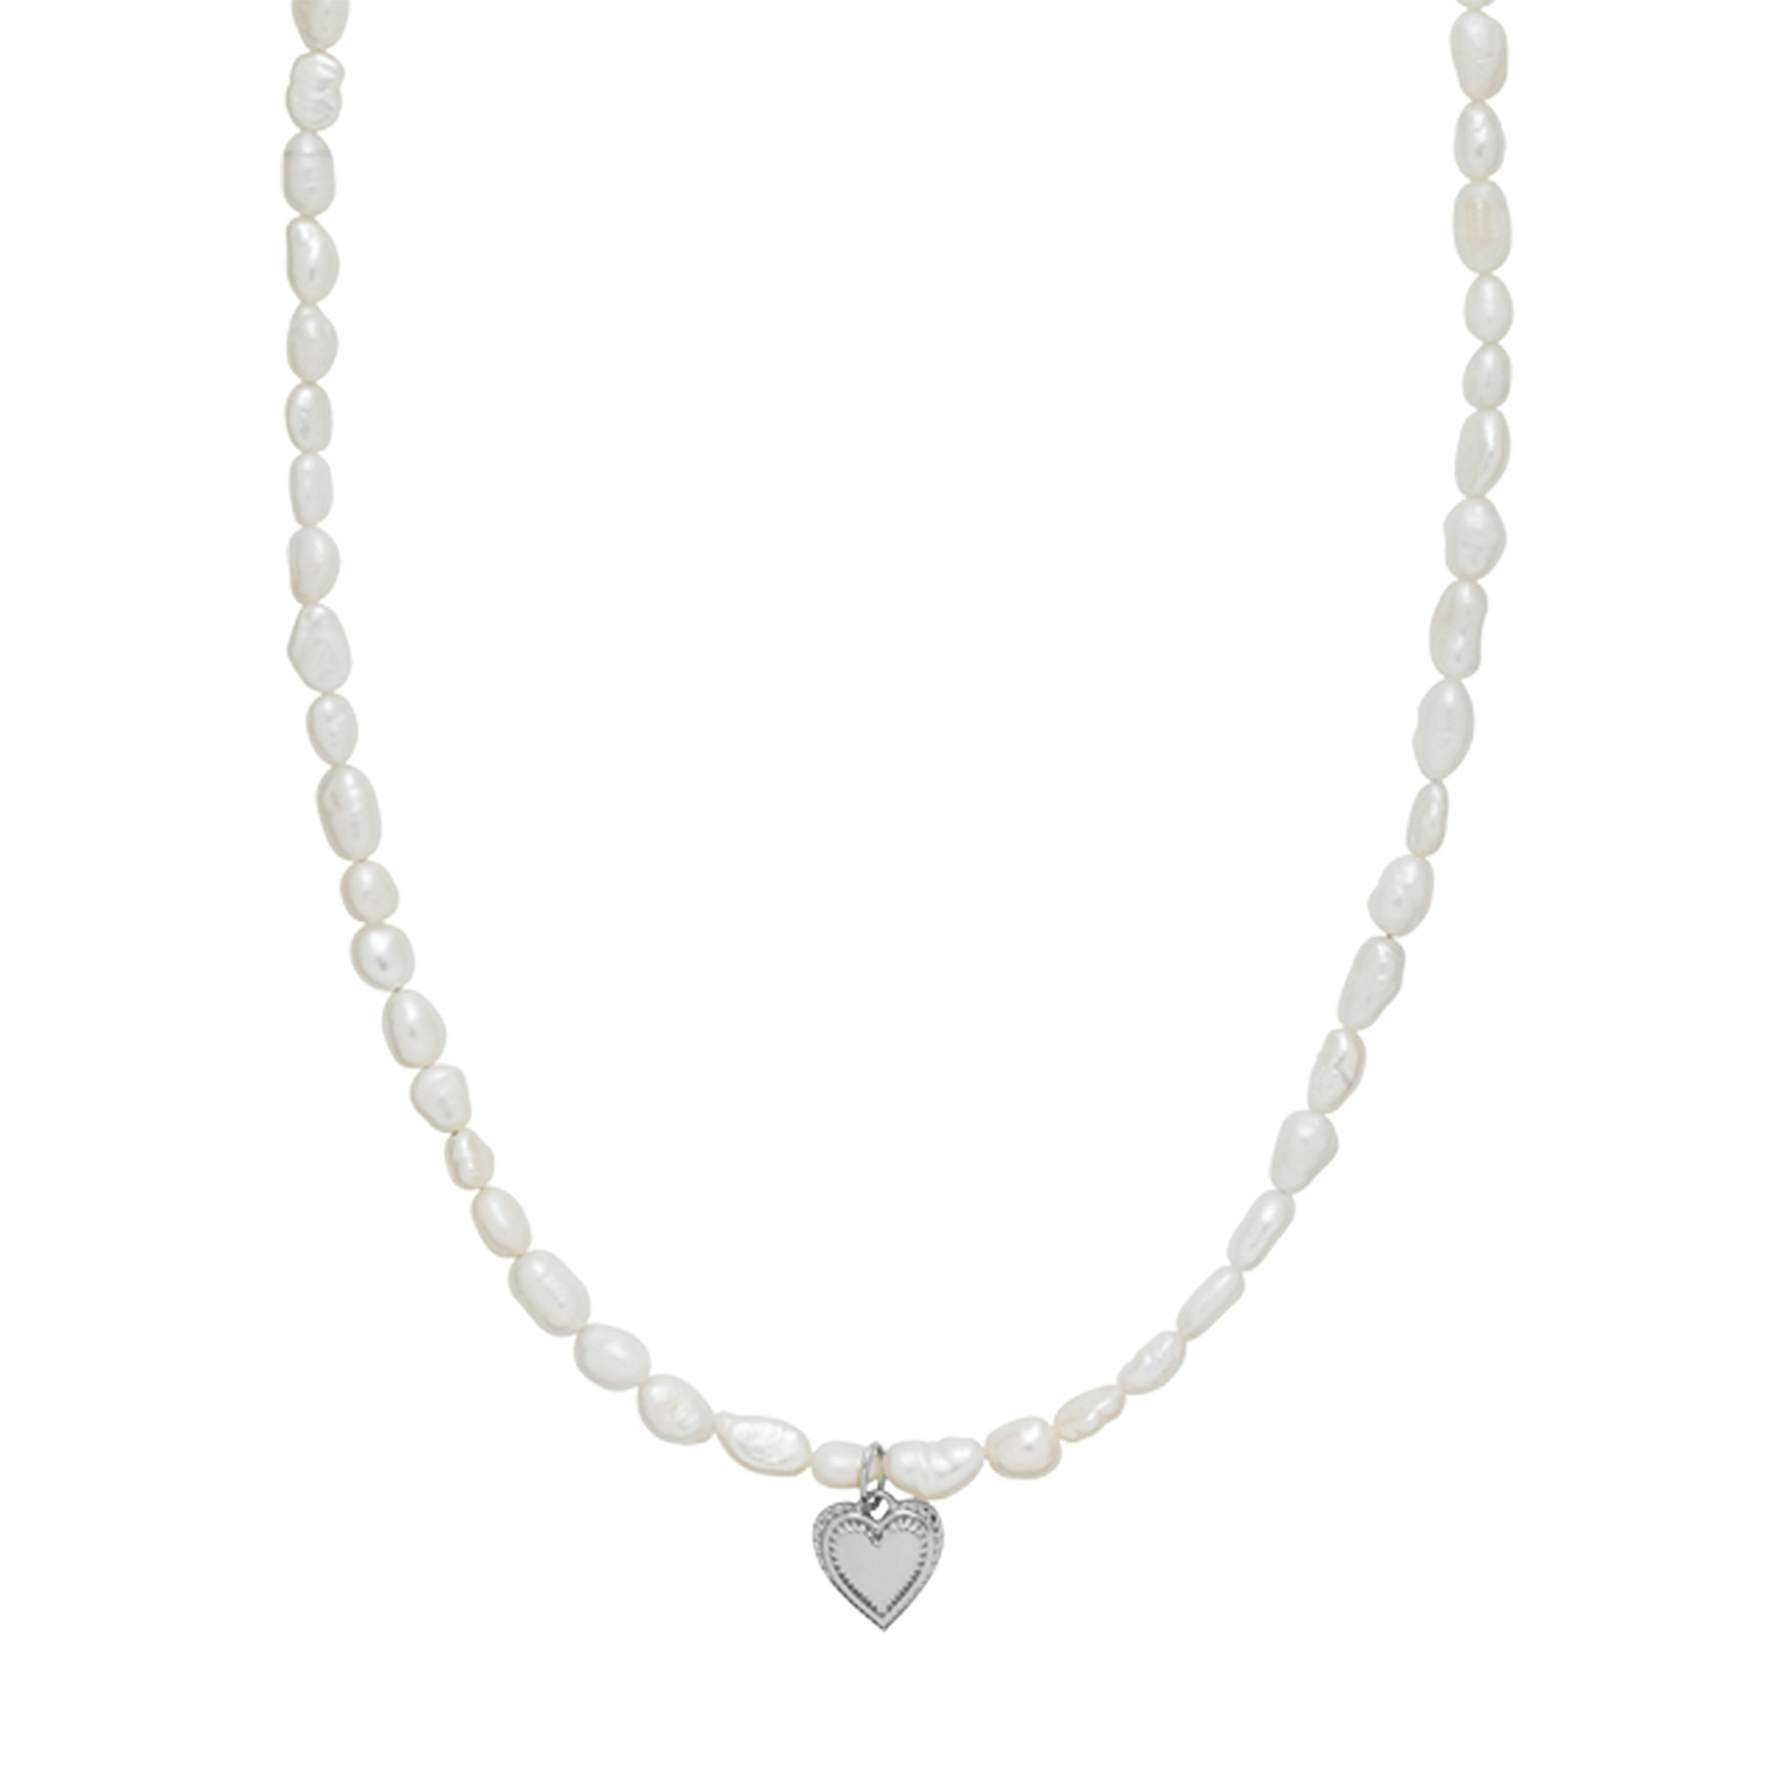 Anne-Sofie Krab x Sistie Heart Necklace från Sistie i Silver Sterling 925